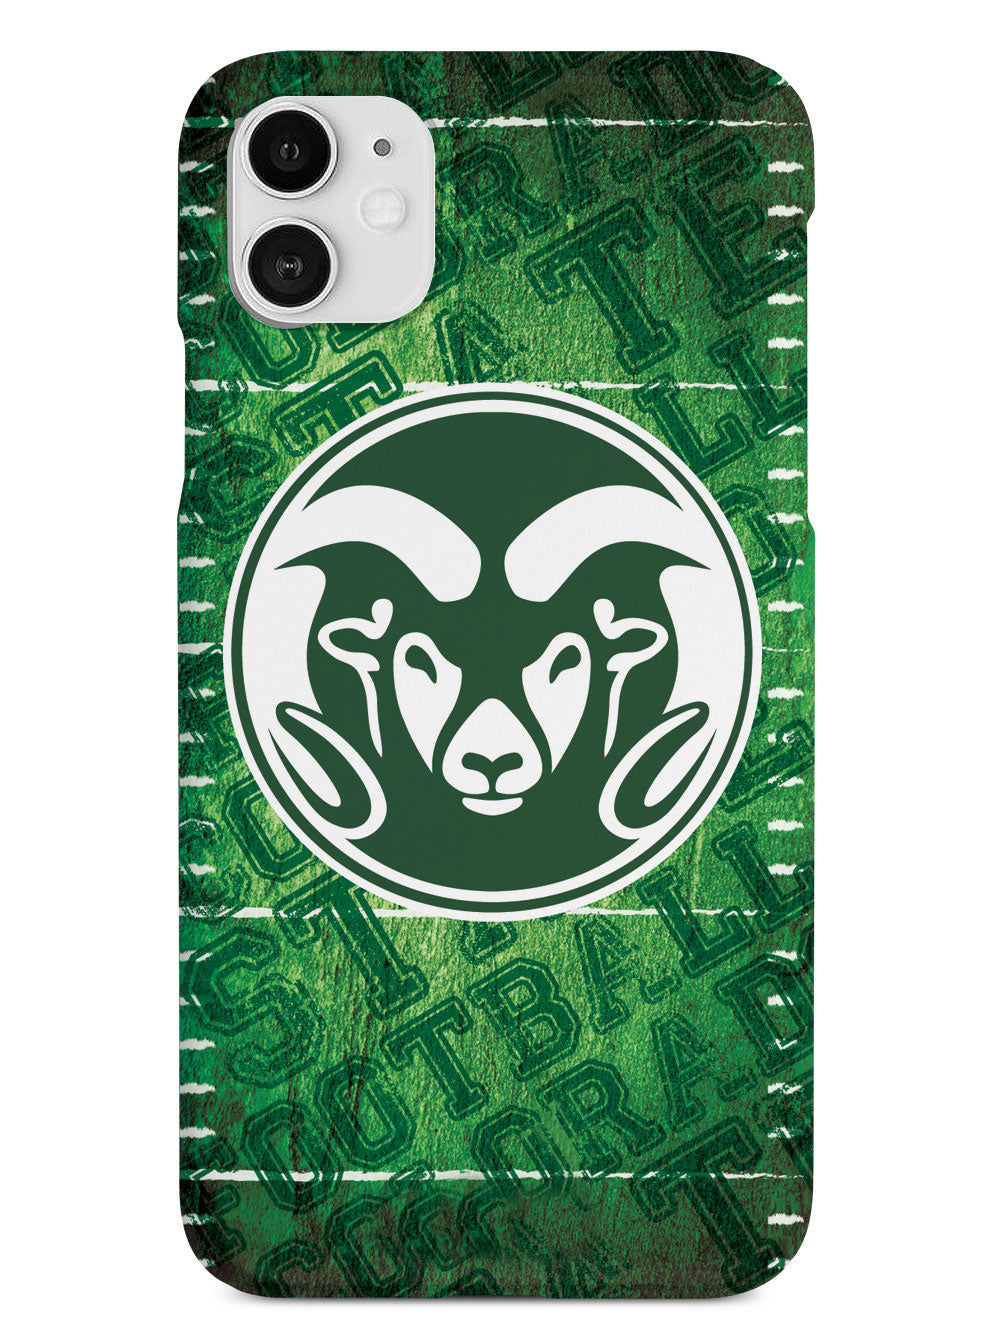 Colorado State University Rams - Football Case